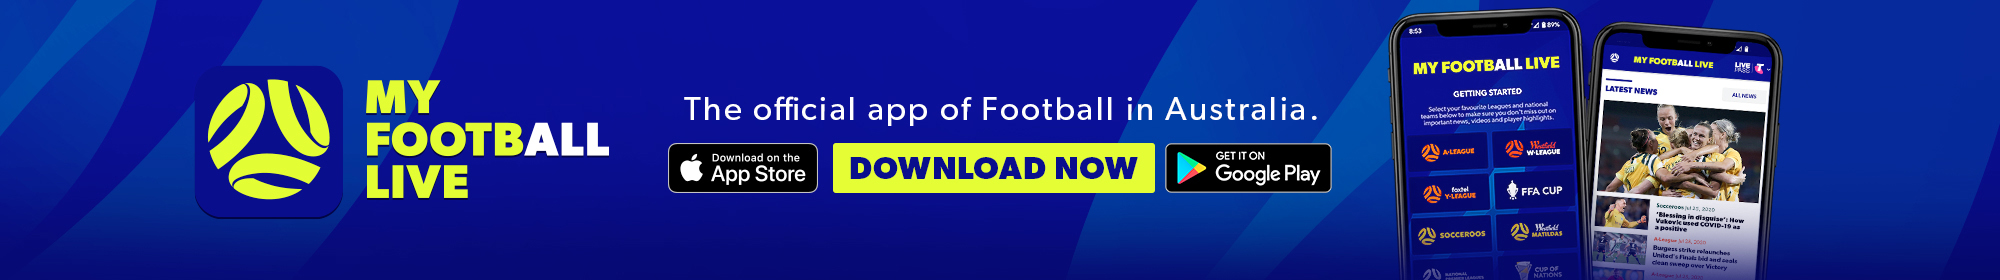 My Football Live app banner thin